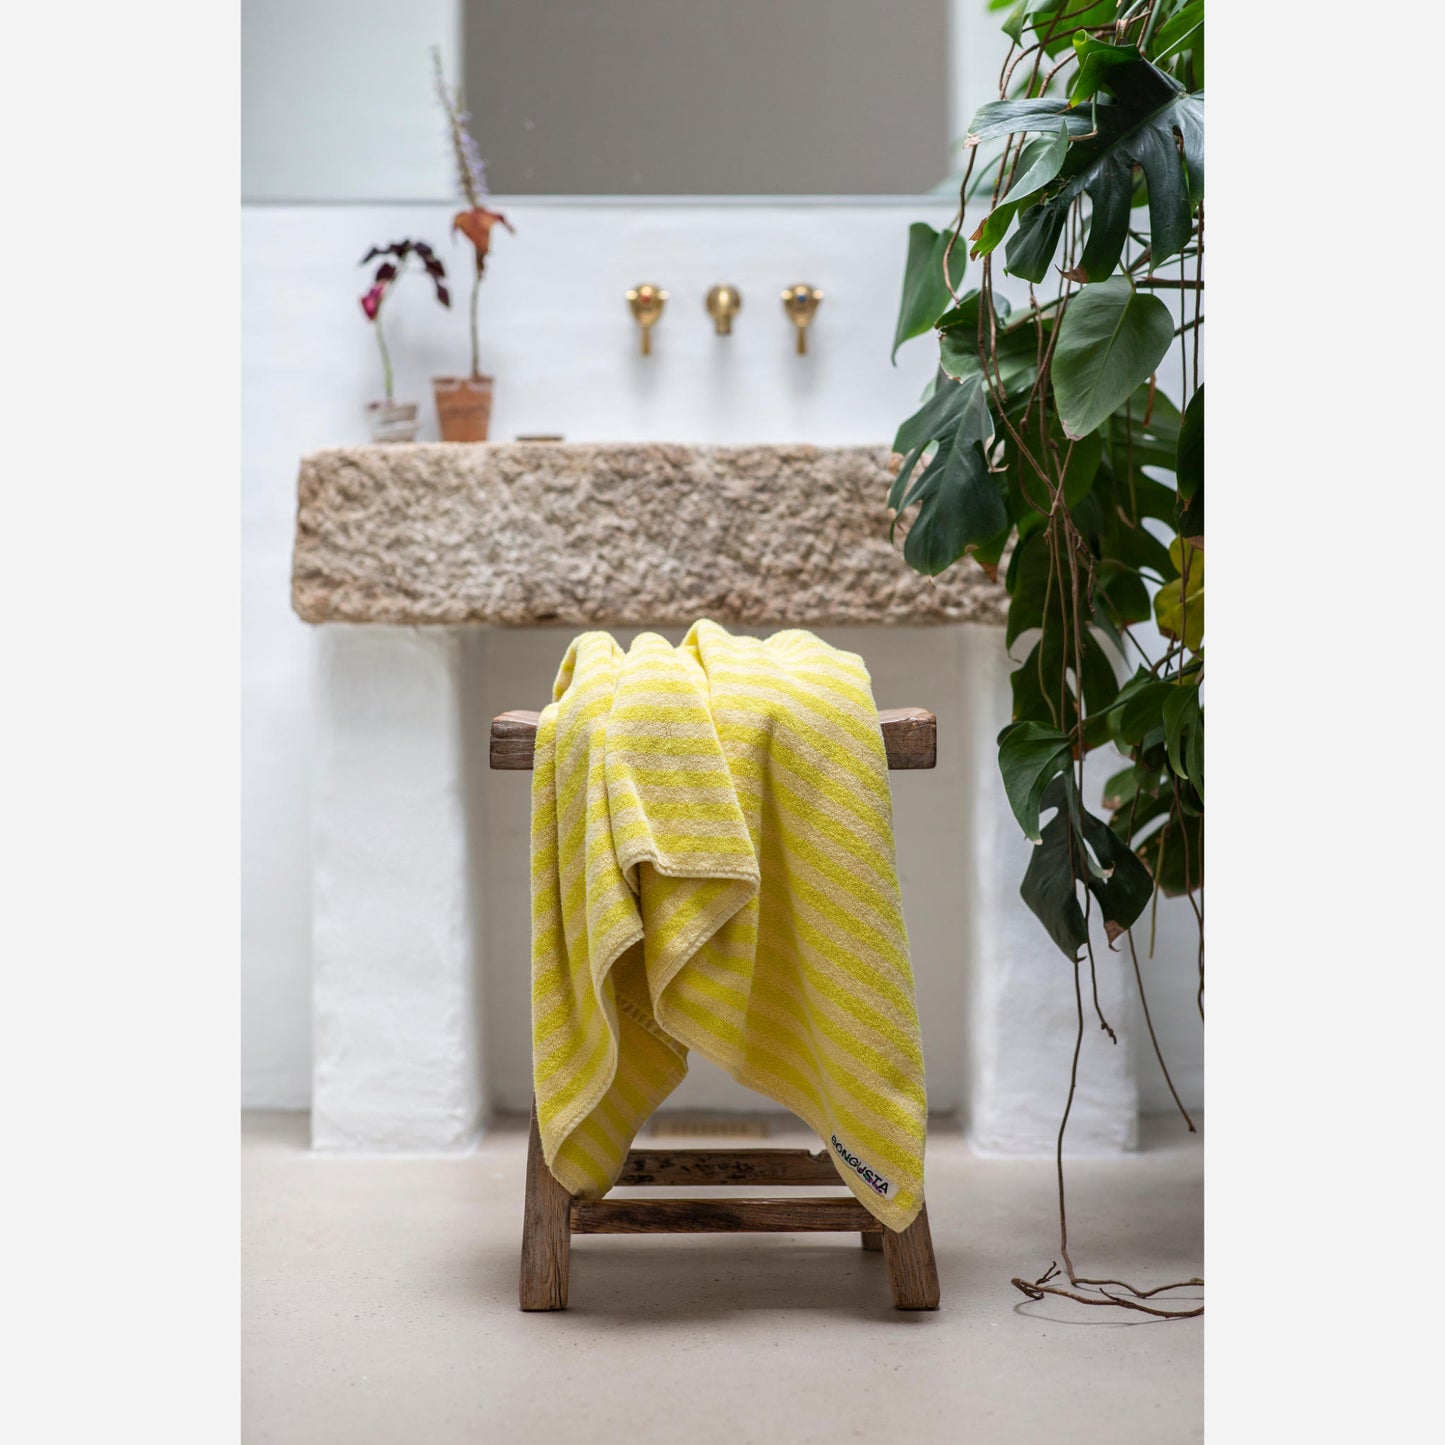 Naram ØkoTex håndklæder i prestine/neon yellow (på badeværelse), fra 175 kr. 